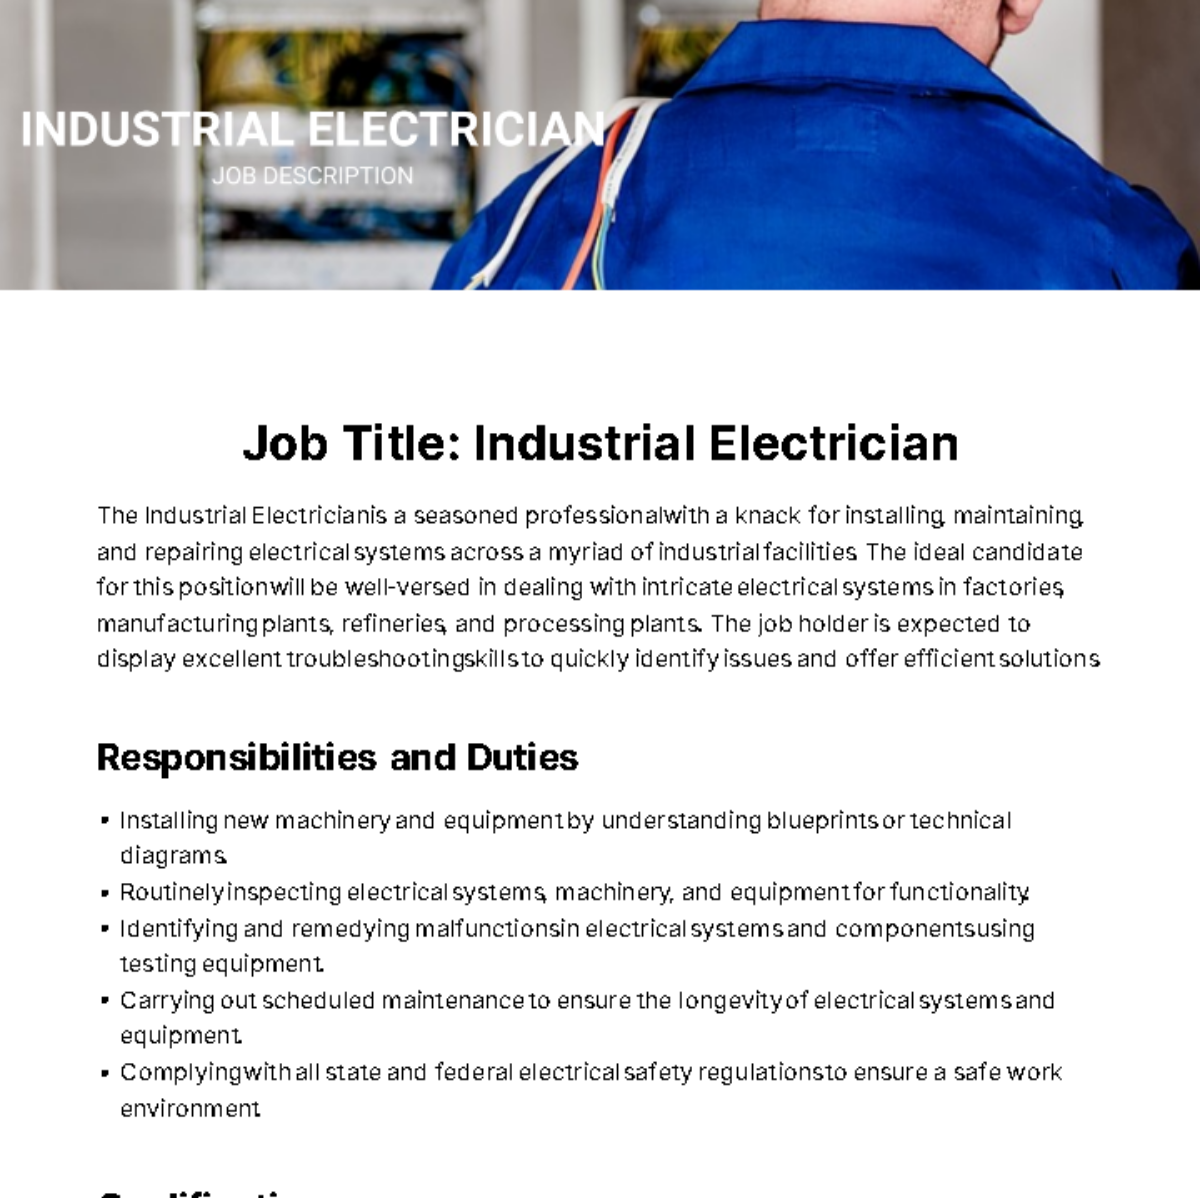 Industrial Electrician Job Description Template